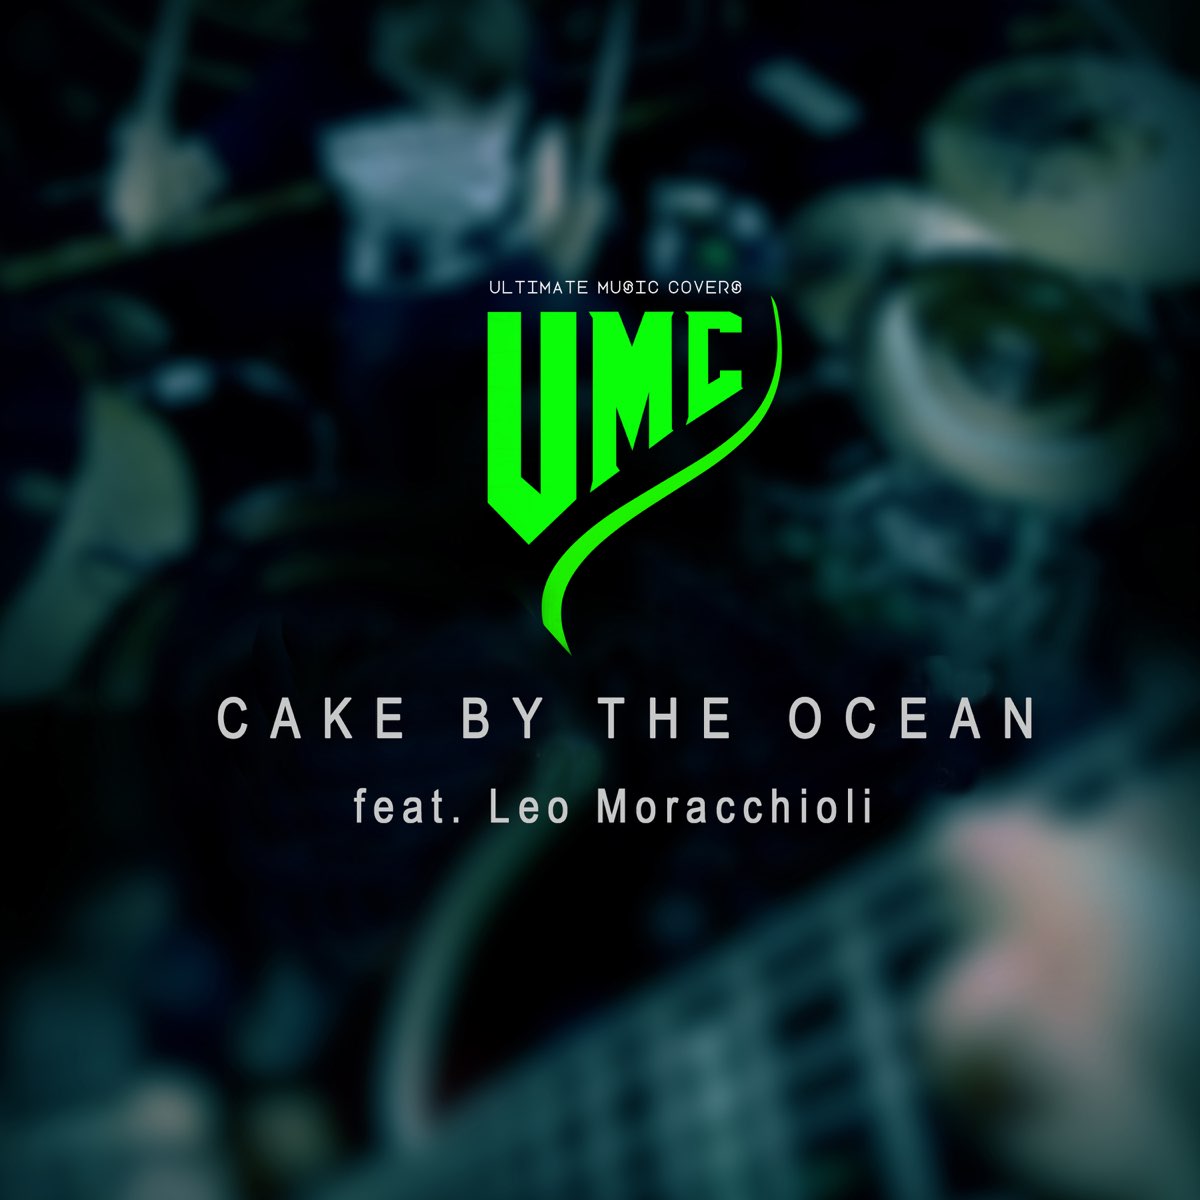 Pris absorption specielt Cake by the Ocean (Metal Version) [feat. Leo Moracchioli] - Single by UMC  on Apple Music